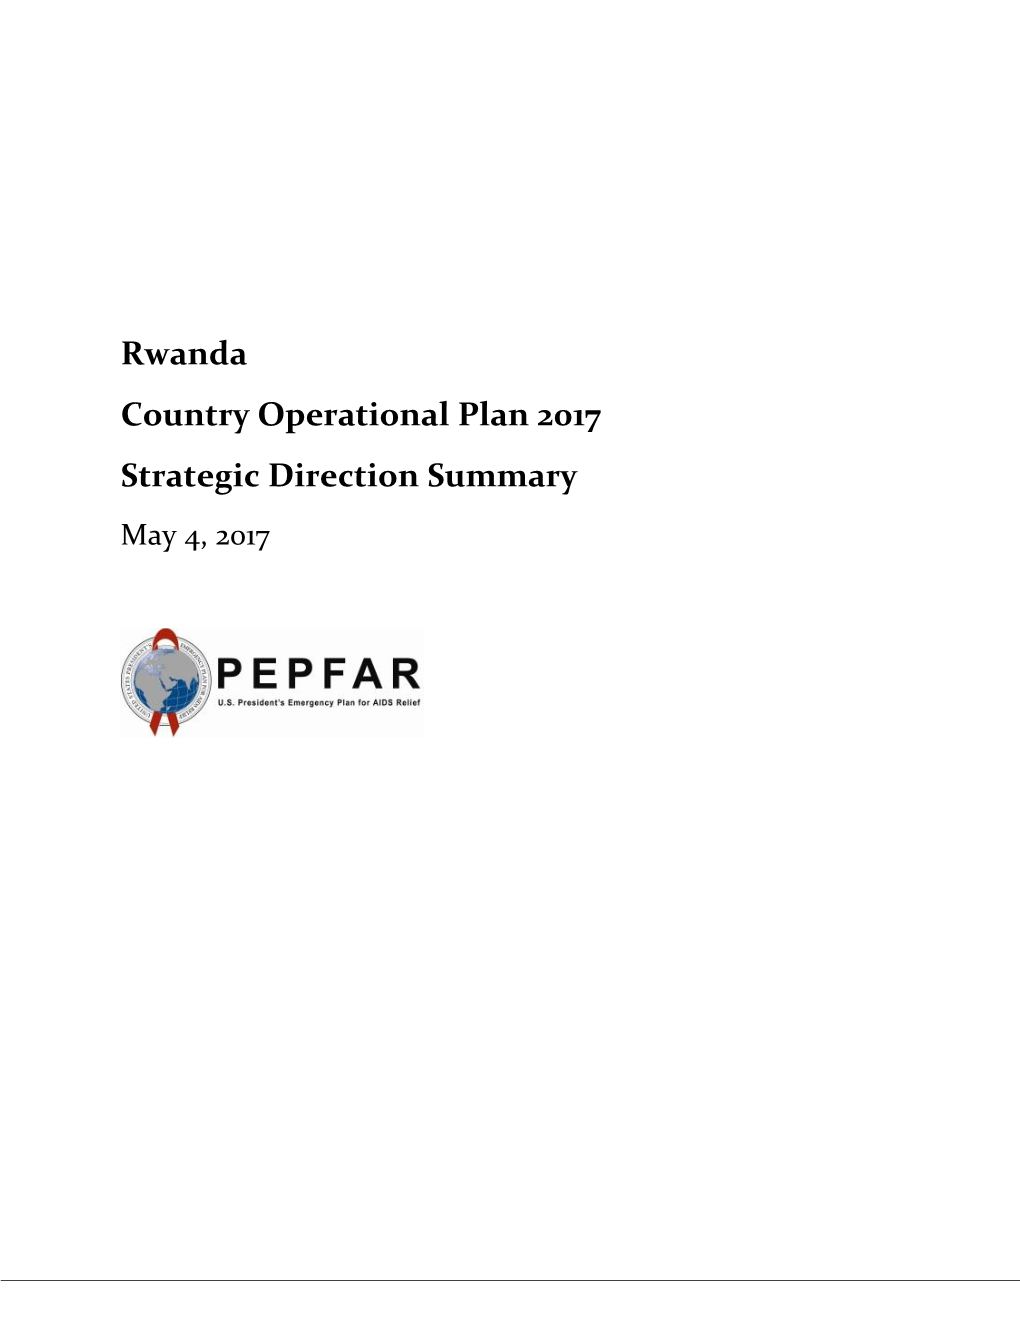 Rwanda Country Operational Plan 2017 Strategic Direction Summary May 4, 2017